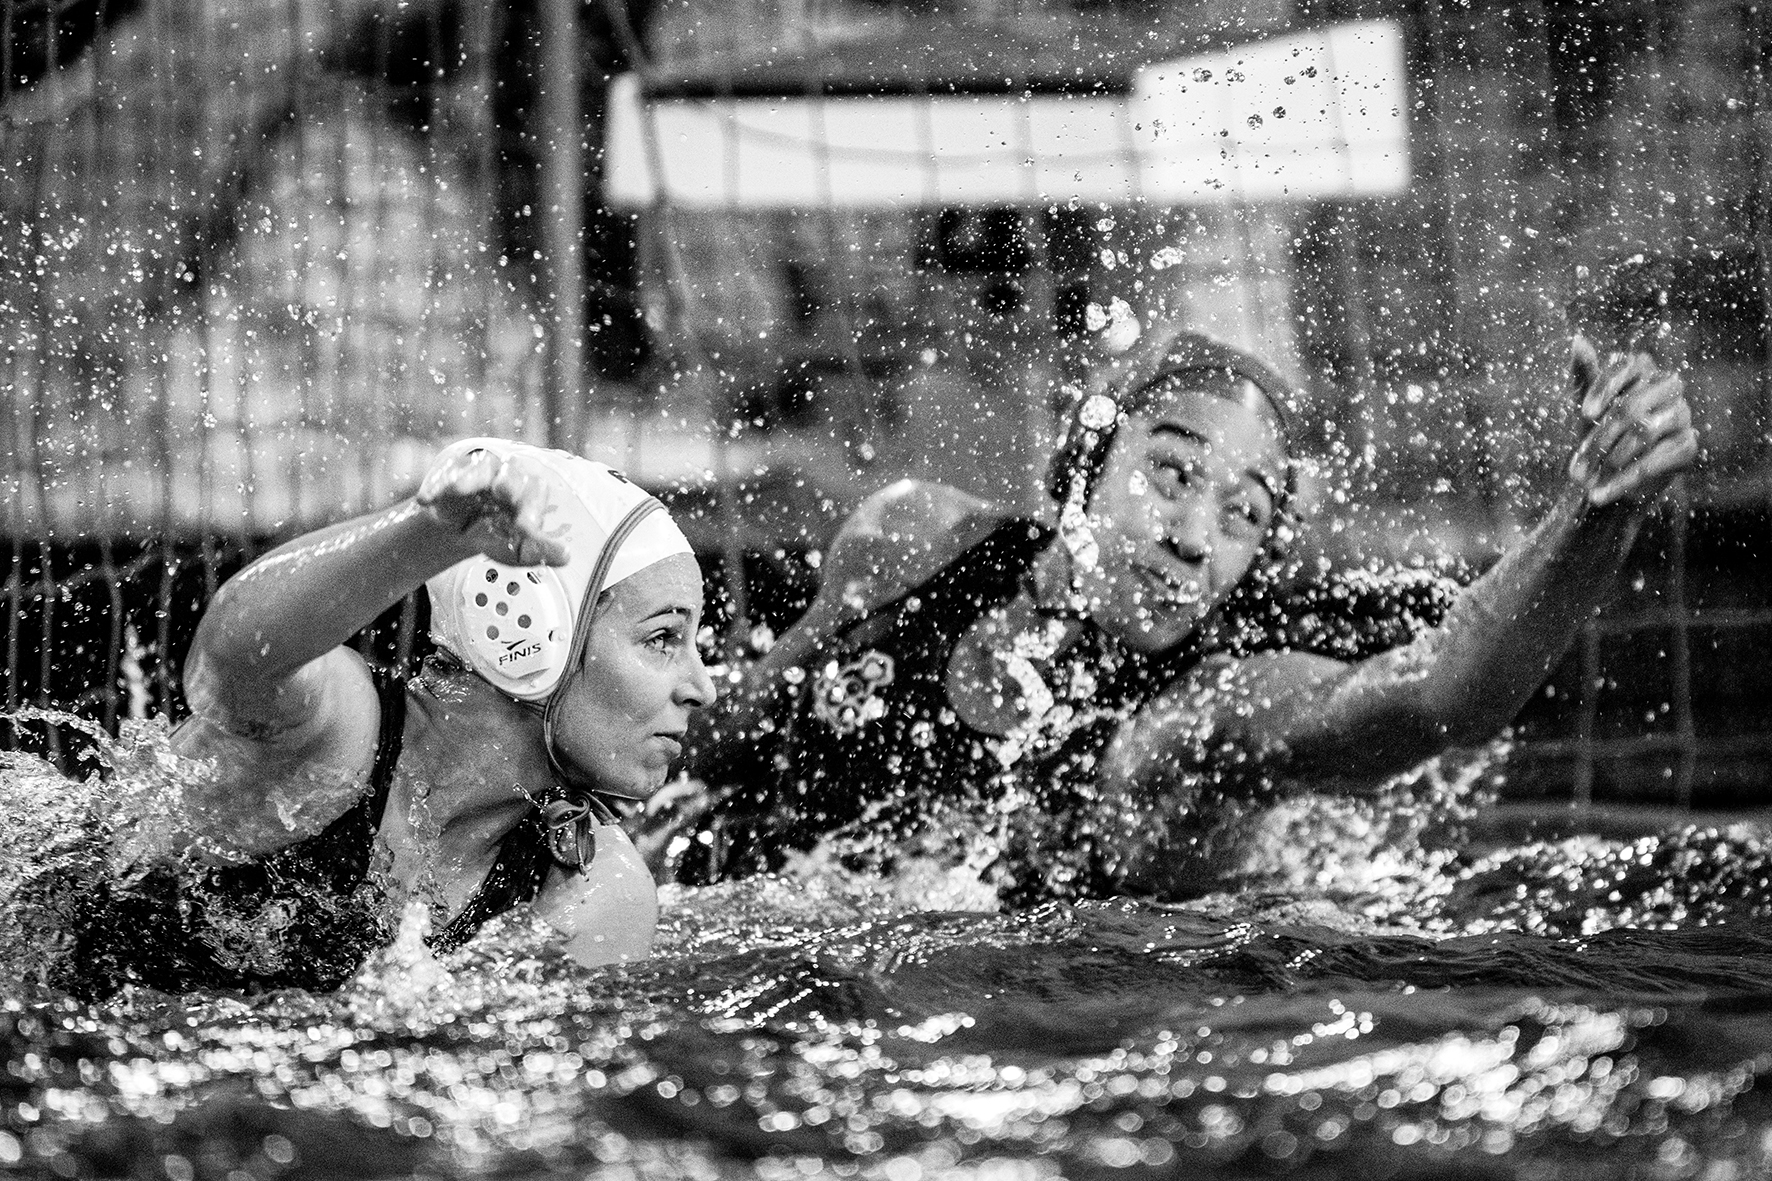 Photographe : natation synchronisée